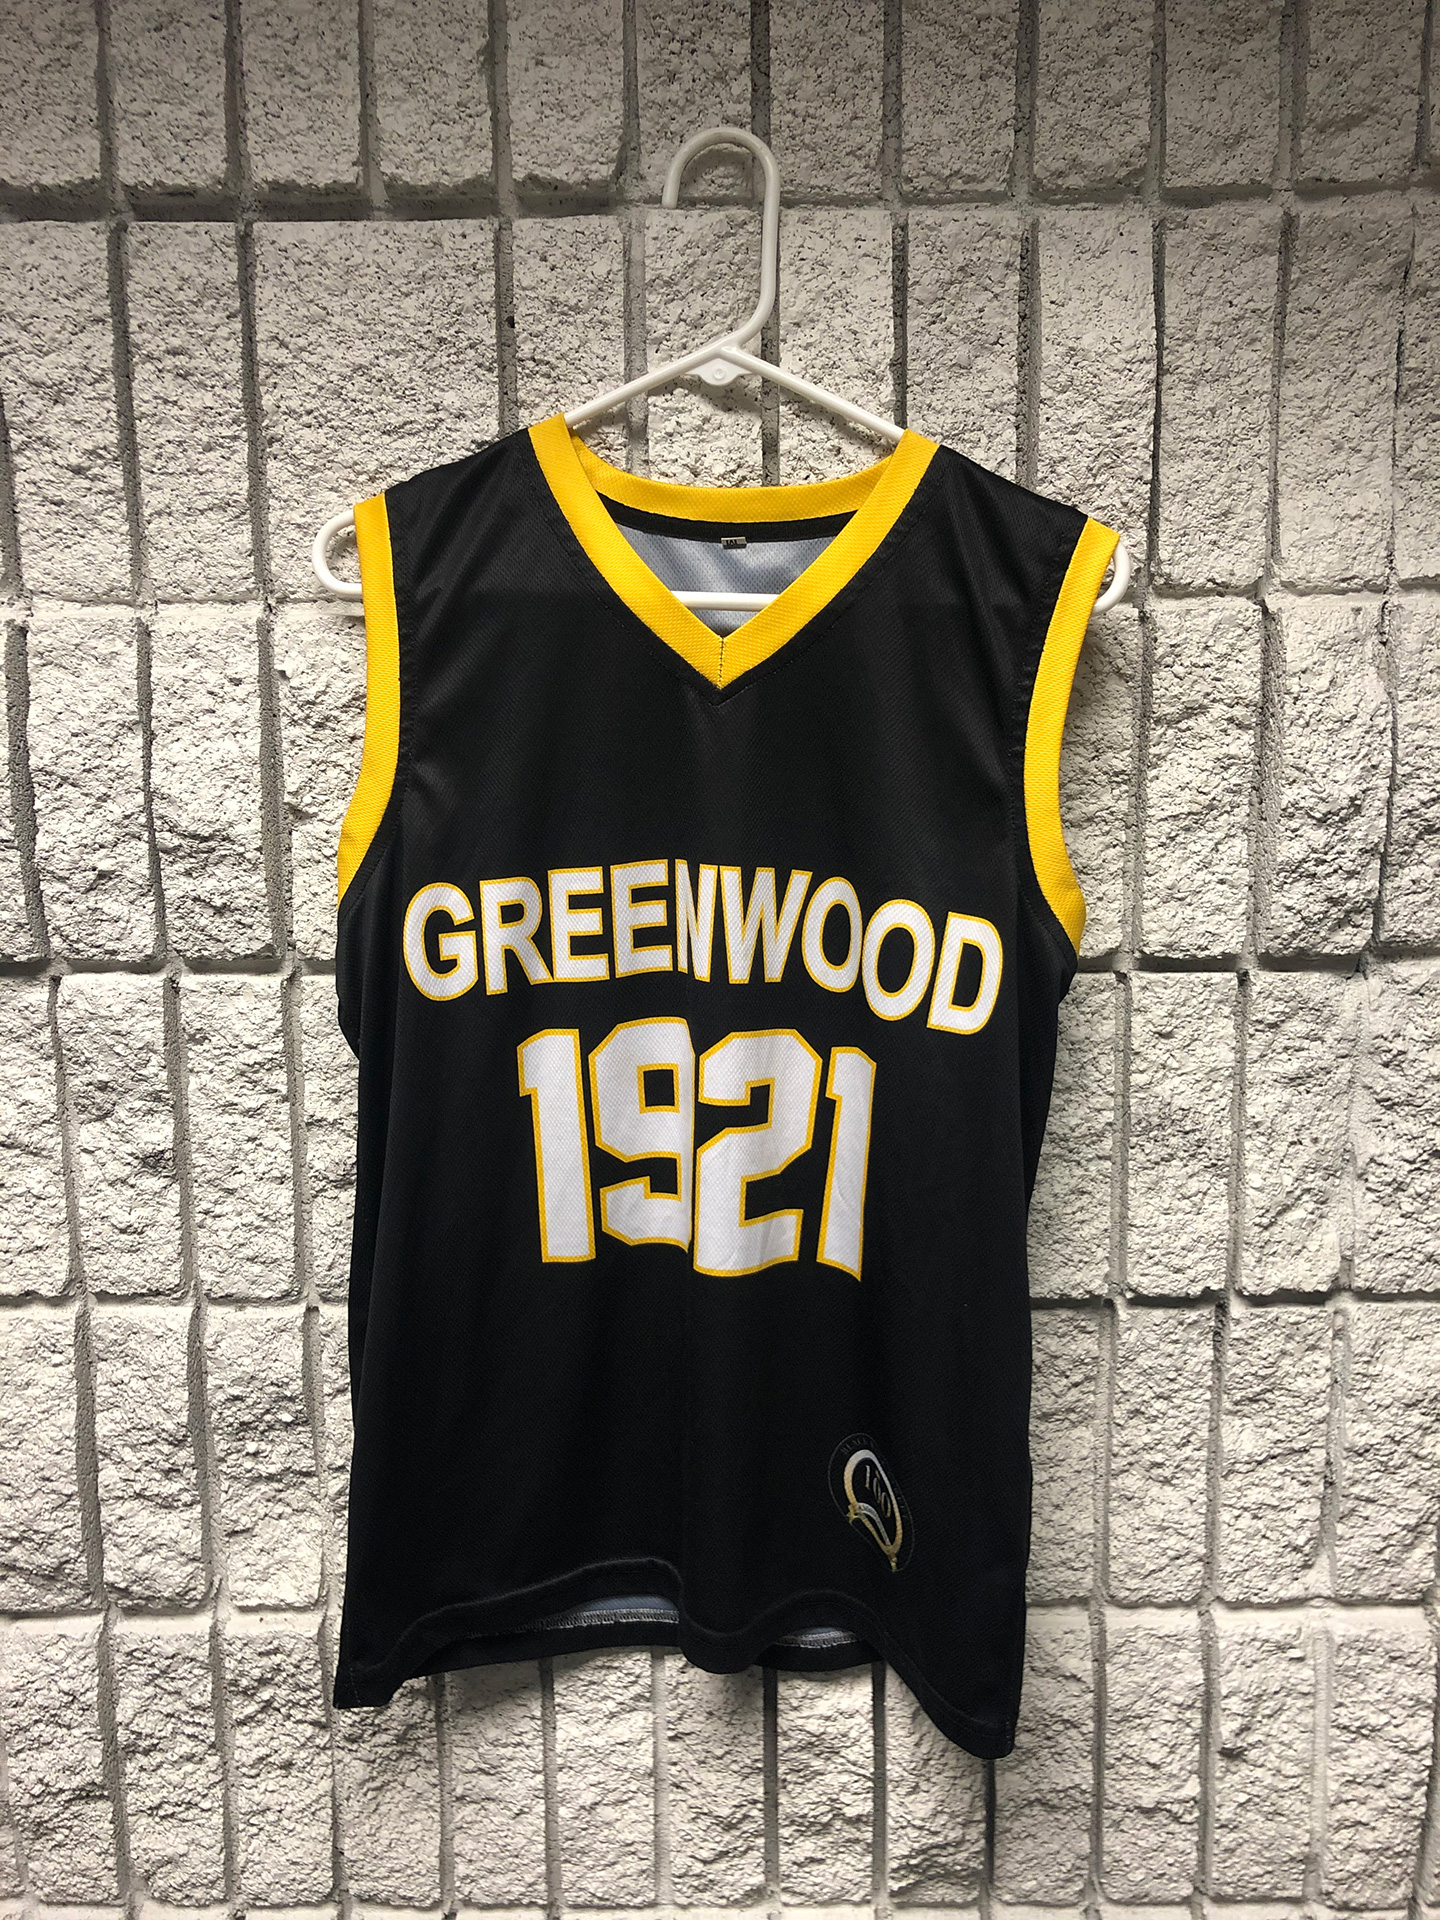 Greenwood 2021 Black Wall Street Basketball Jersey